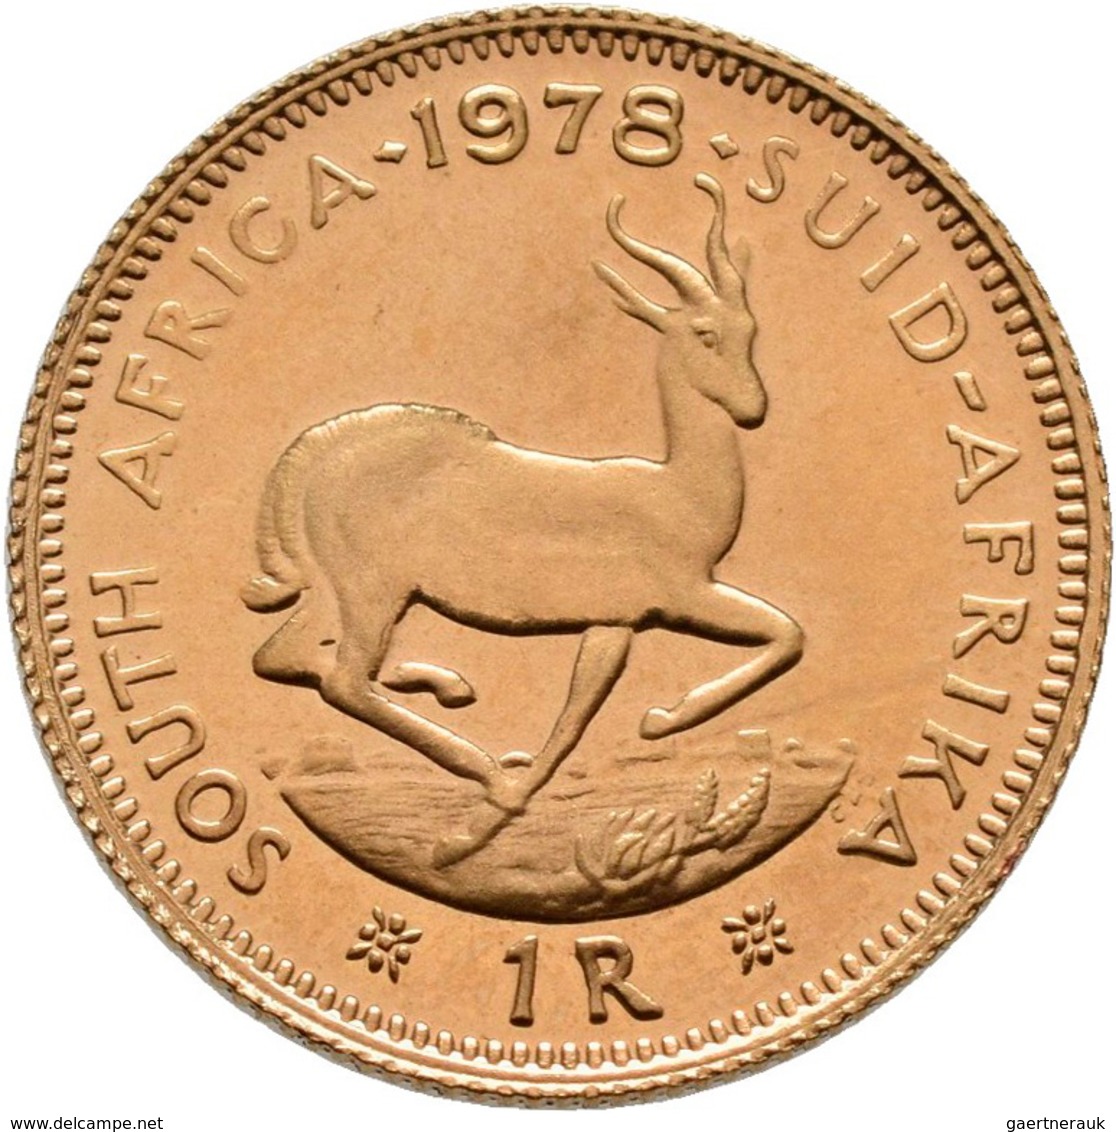 Südafrika - Anlagegold: Lot 2 Goldmünzen: 1 Rand 1978, KM# 63, Friedberg 12, 3,99 G, 917/1000 Gold, - Zuid-Afrika